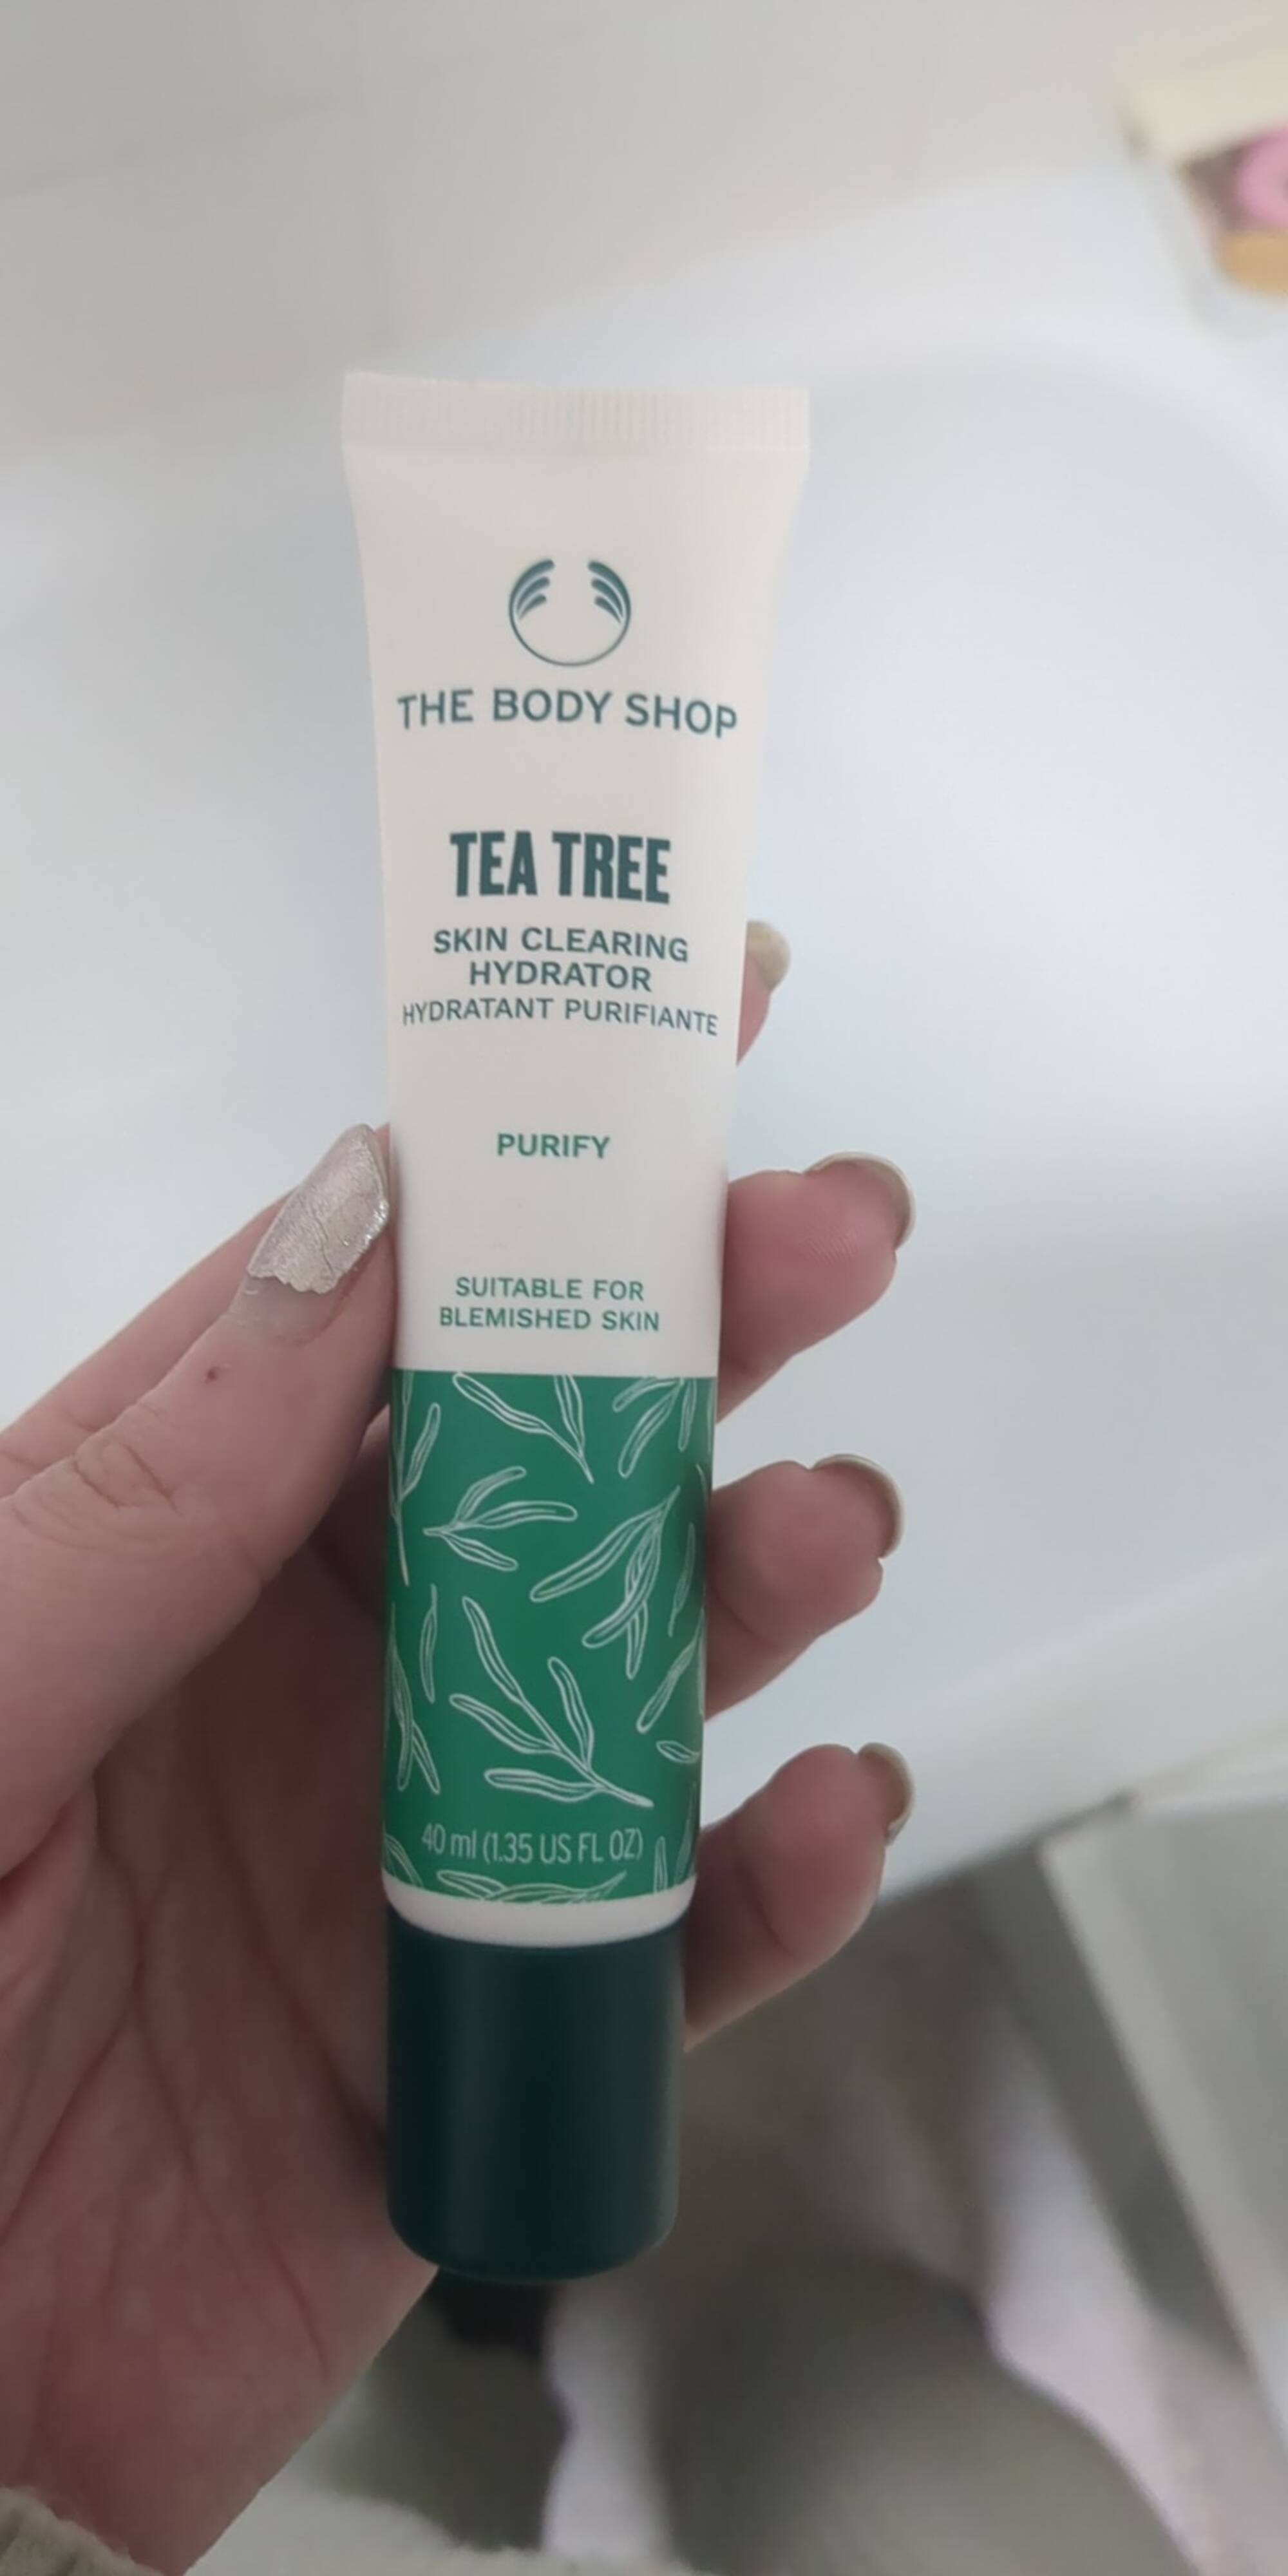 THE BODY SHOP - Tea tree - Hydratant purifiante